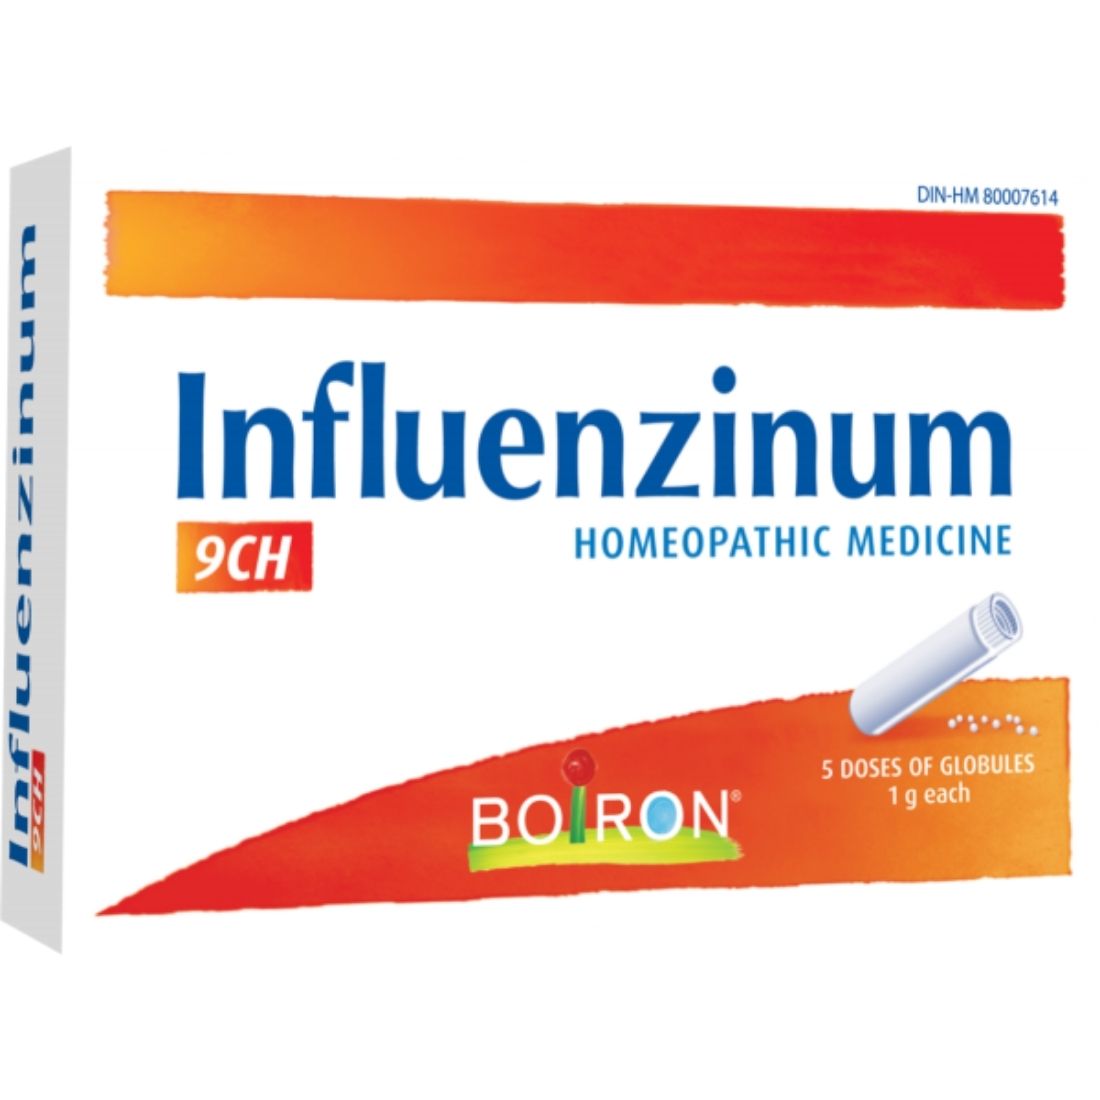 Boiron Influenzinum 9ch (2023/2024), 5 Doses